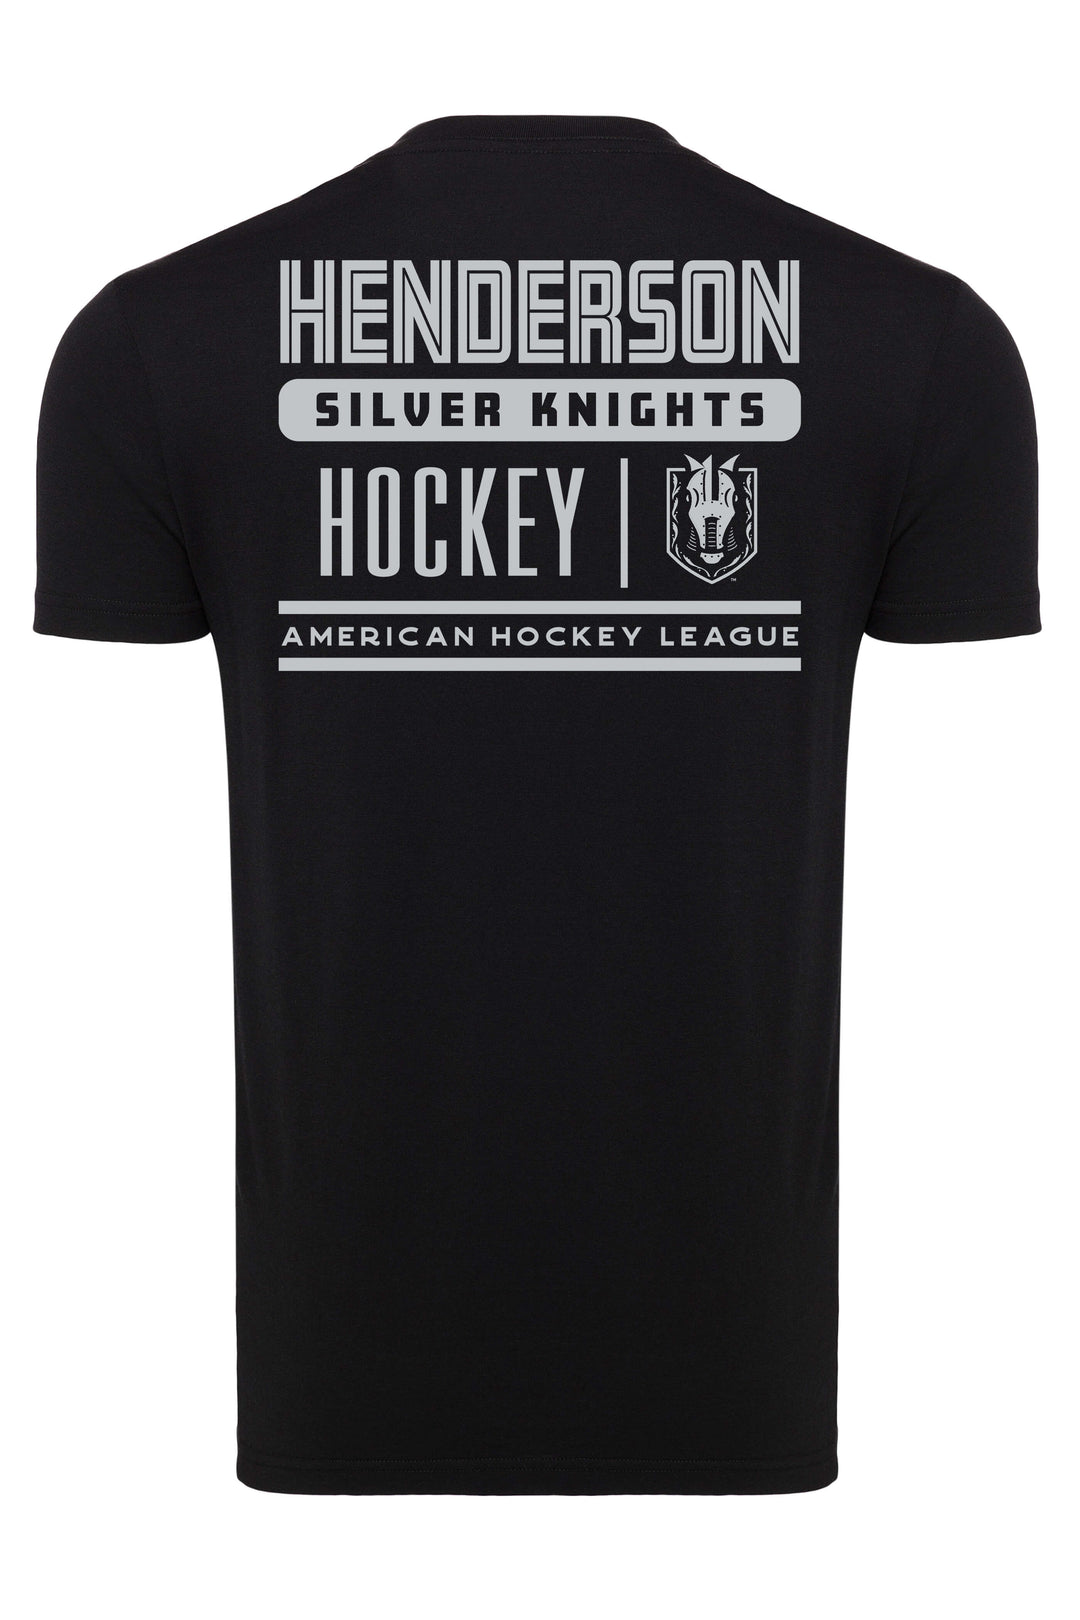 Henderson Silver Knights Sportiqe Small Logo T-Shirt - Vegas Team Store